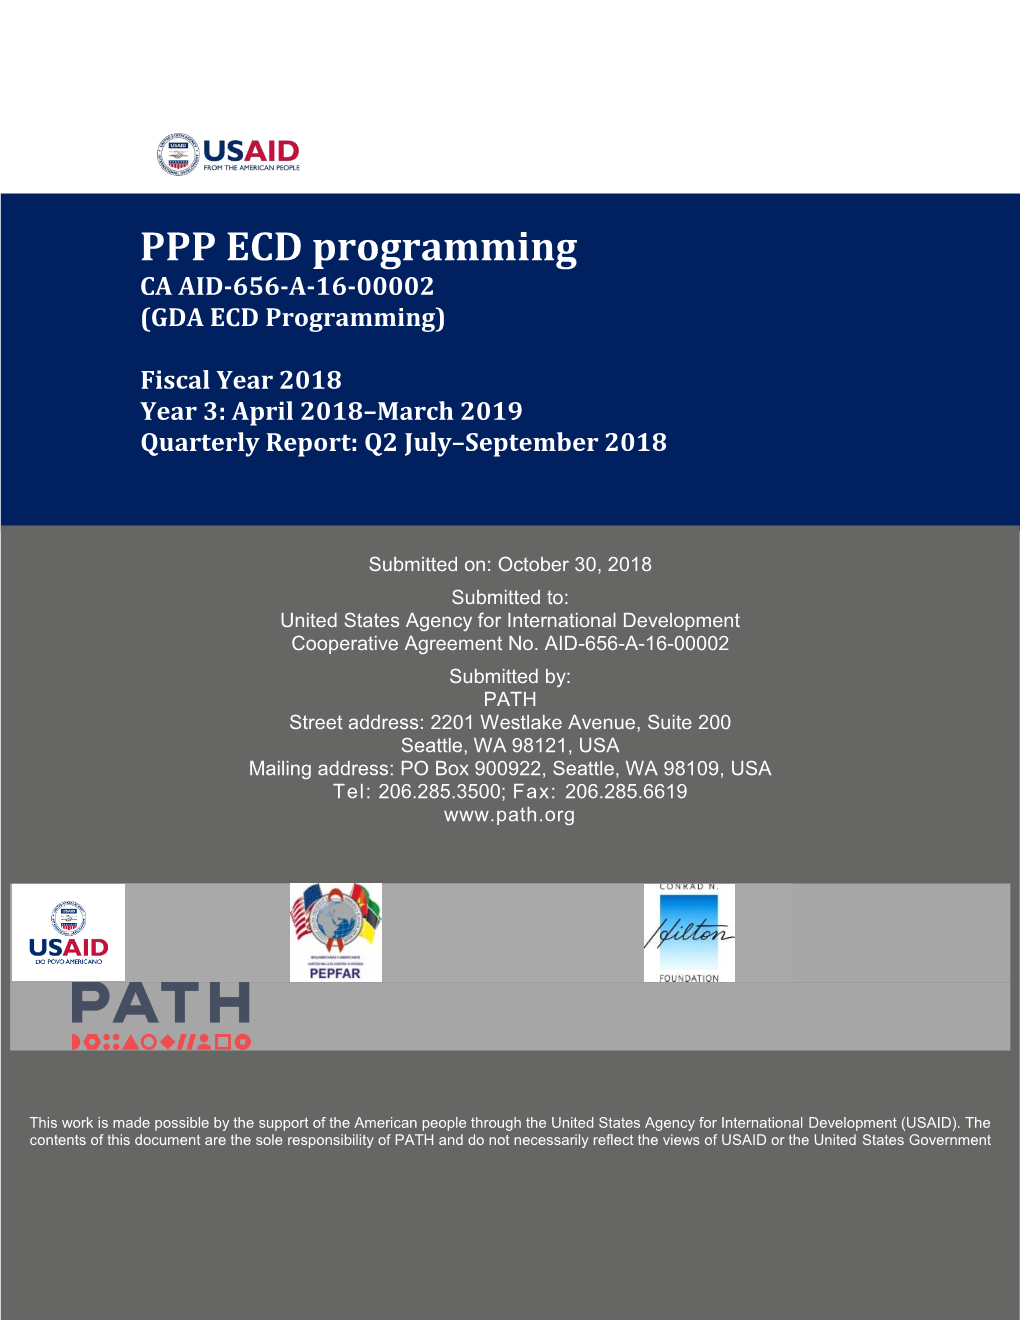 PPP ECD Programming